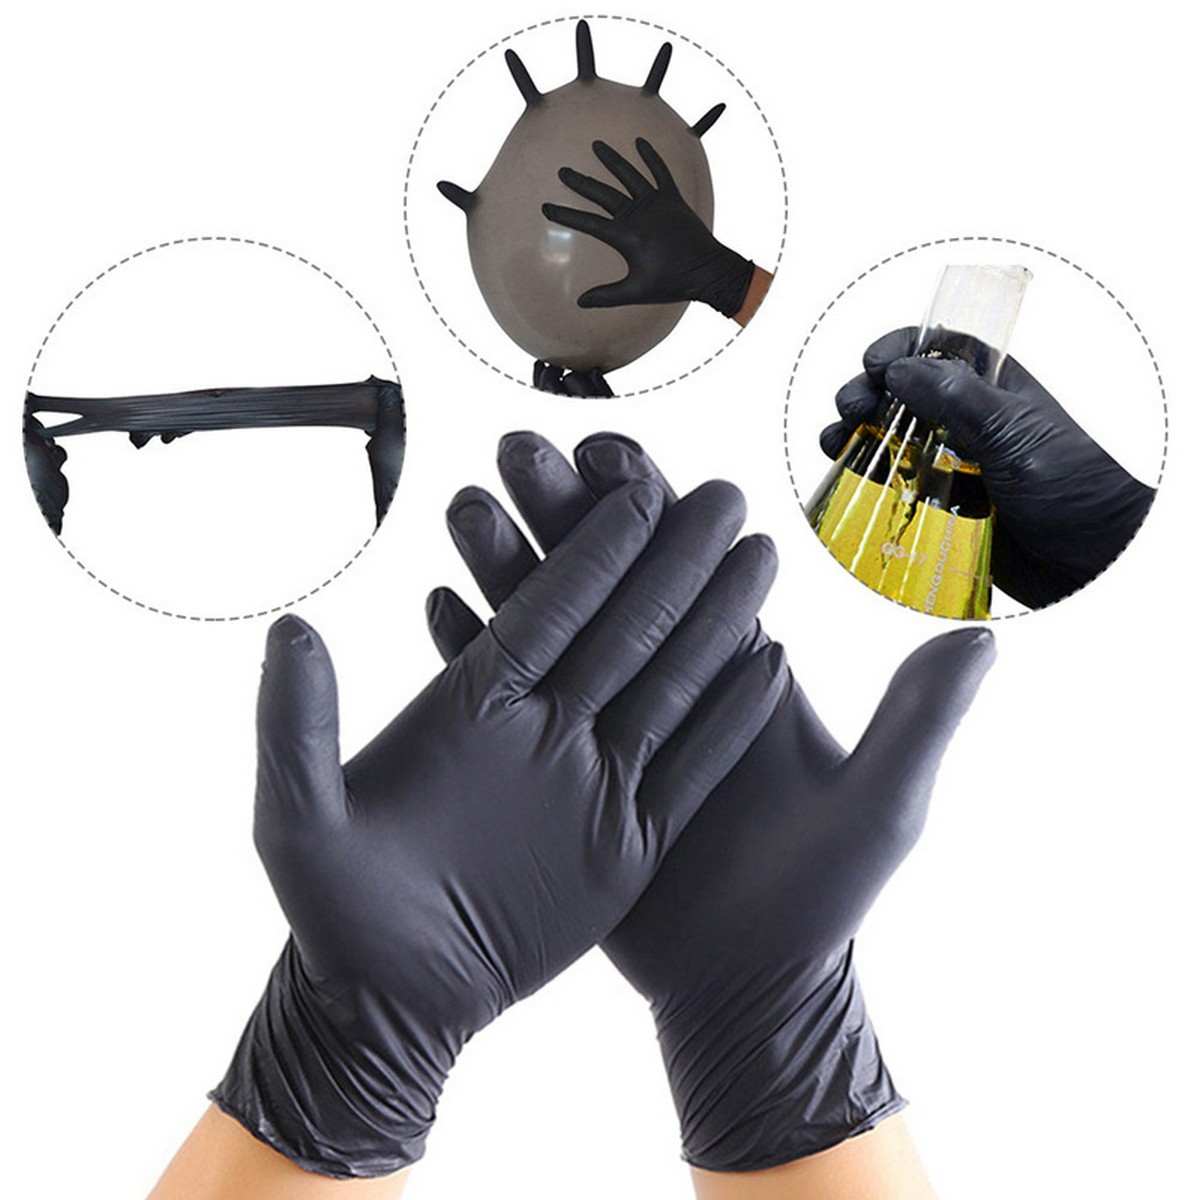 rubber gloves nitrile protective color black